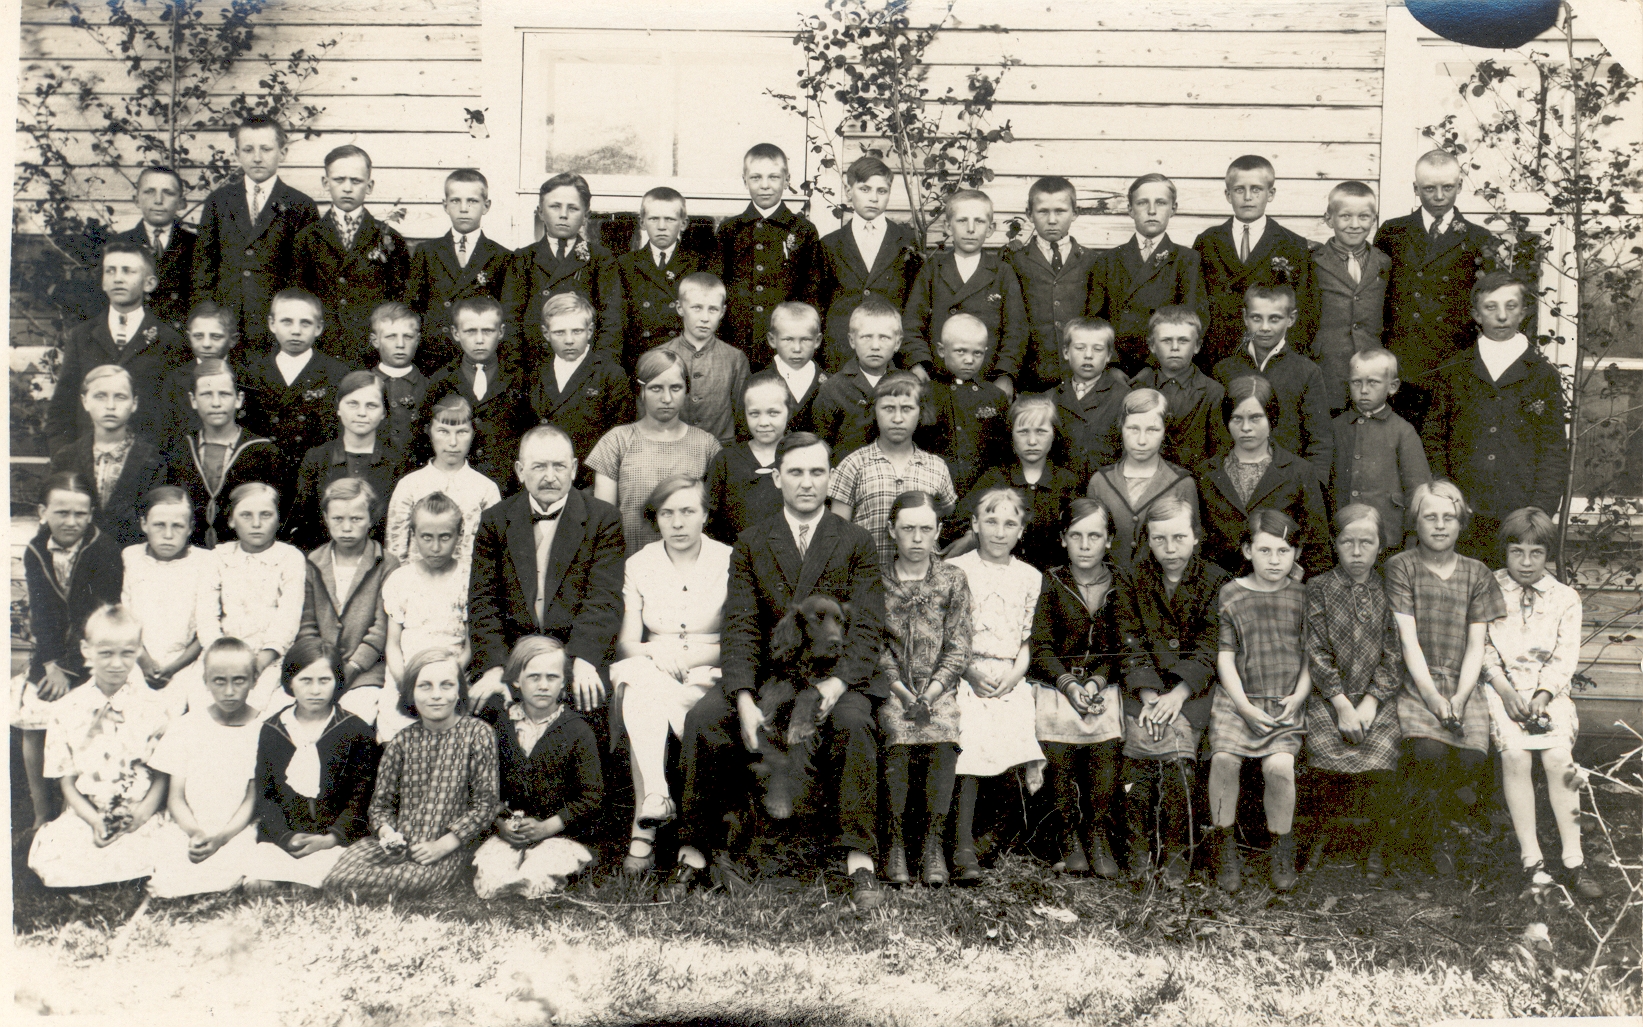 Ernst Enno Hõbring primary school teachers and students in 1929.